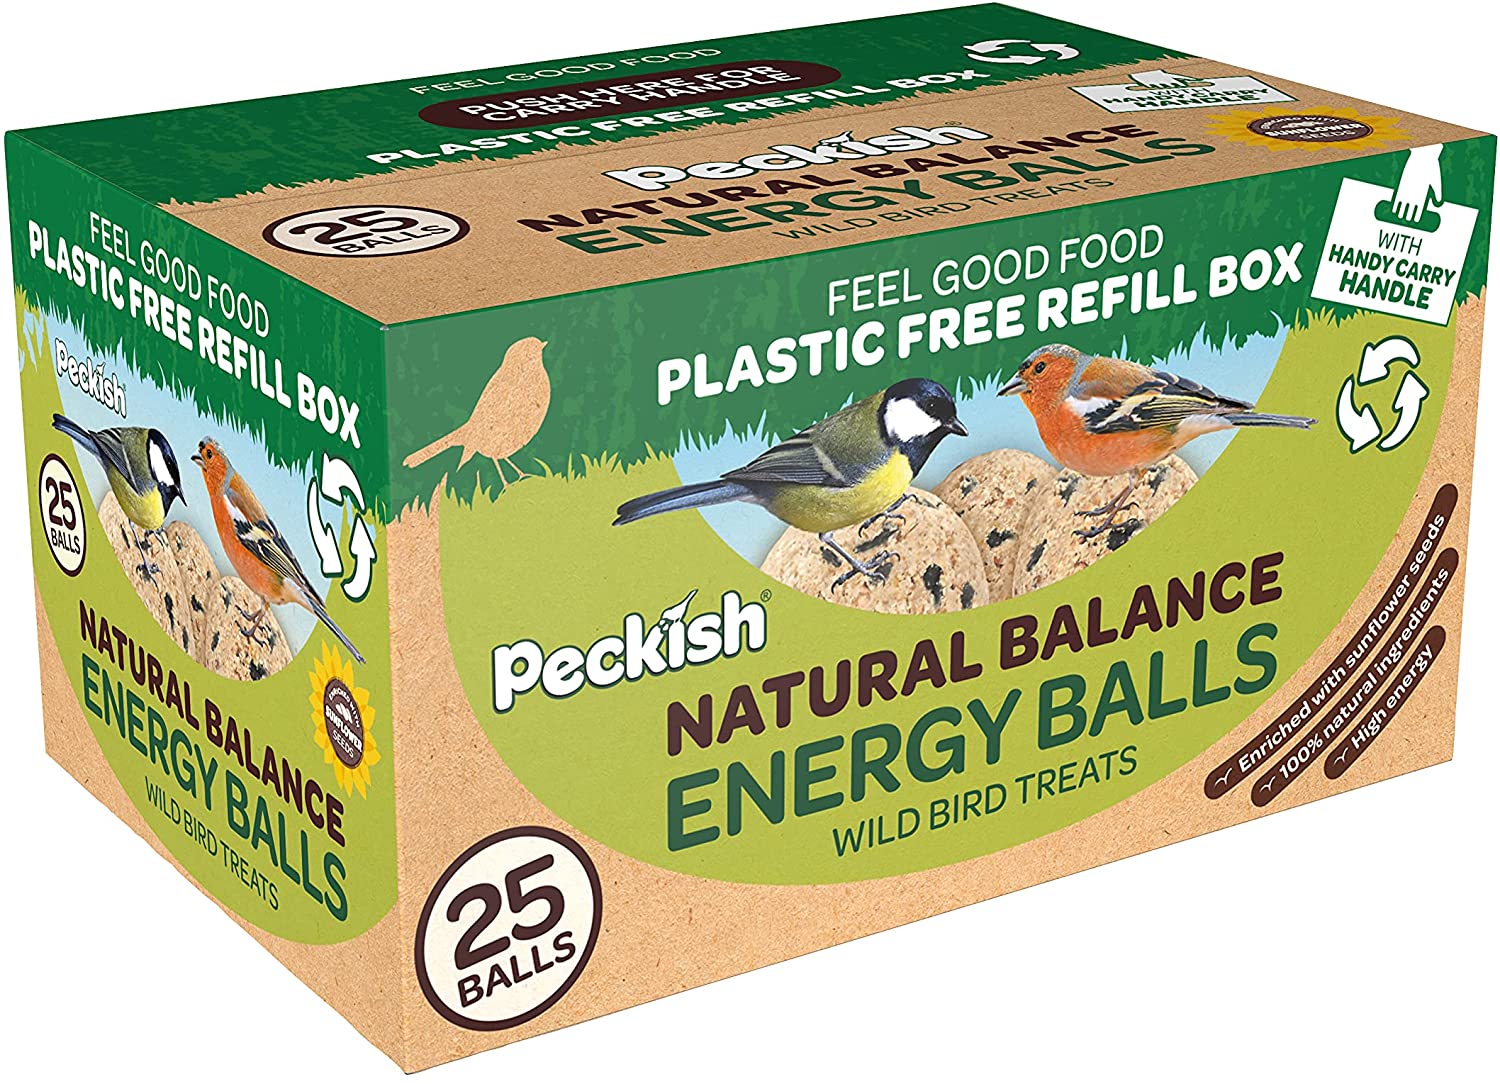 Peckish Natural Balance Energy Balls 25 Box (Plastic Free Packaging)